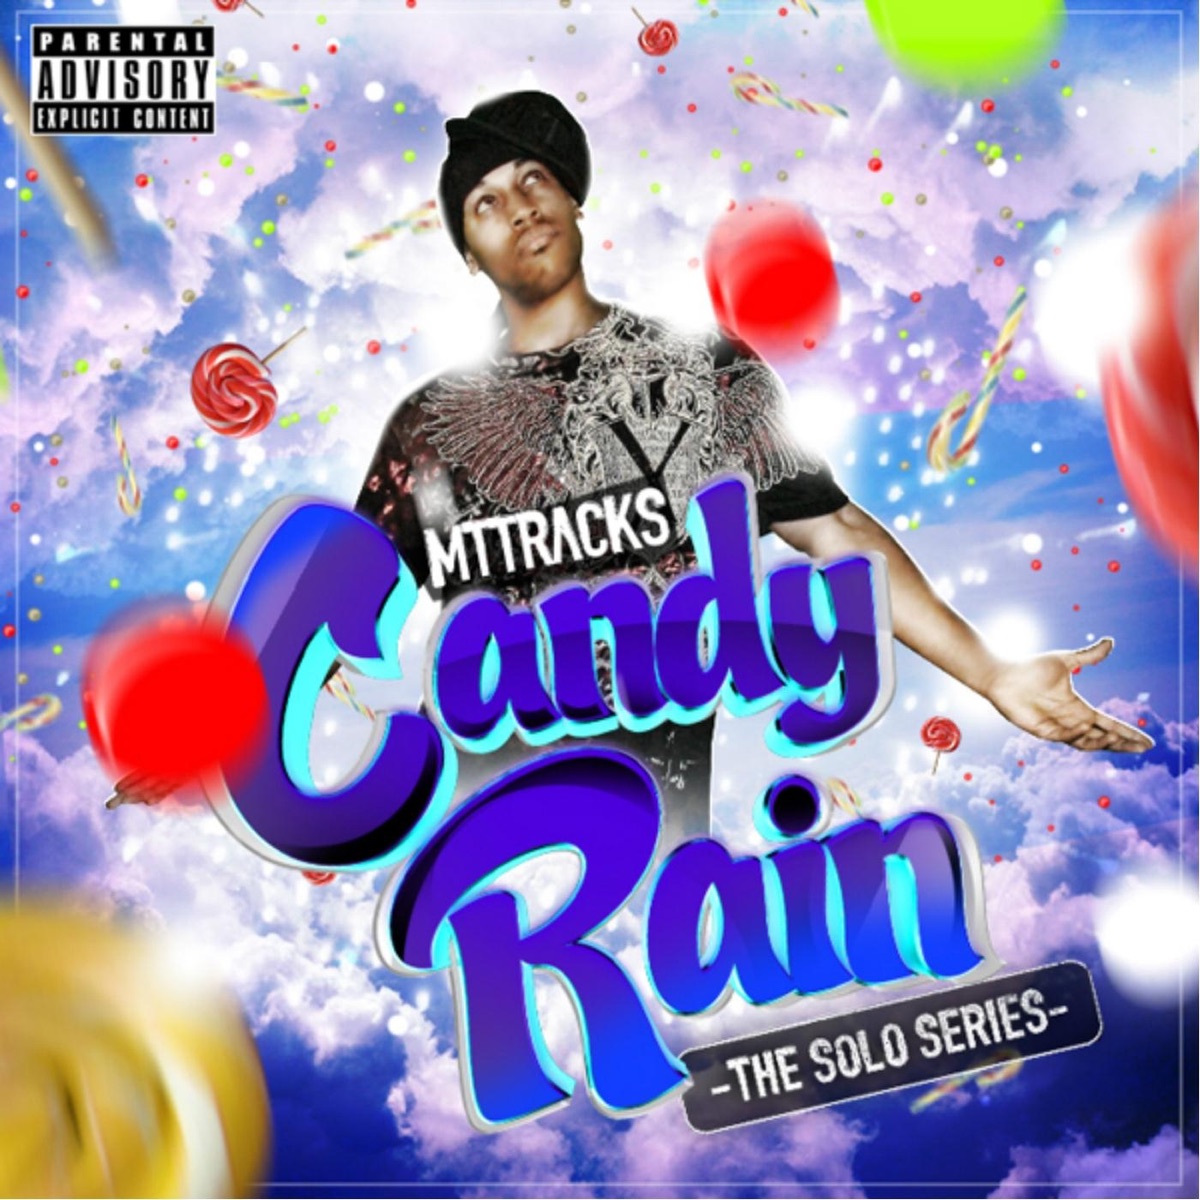 MTTRACKS - Candy Rain: The Solo Series